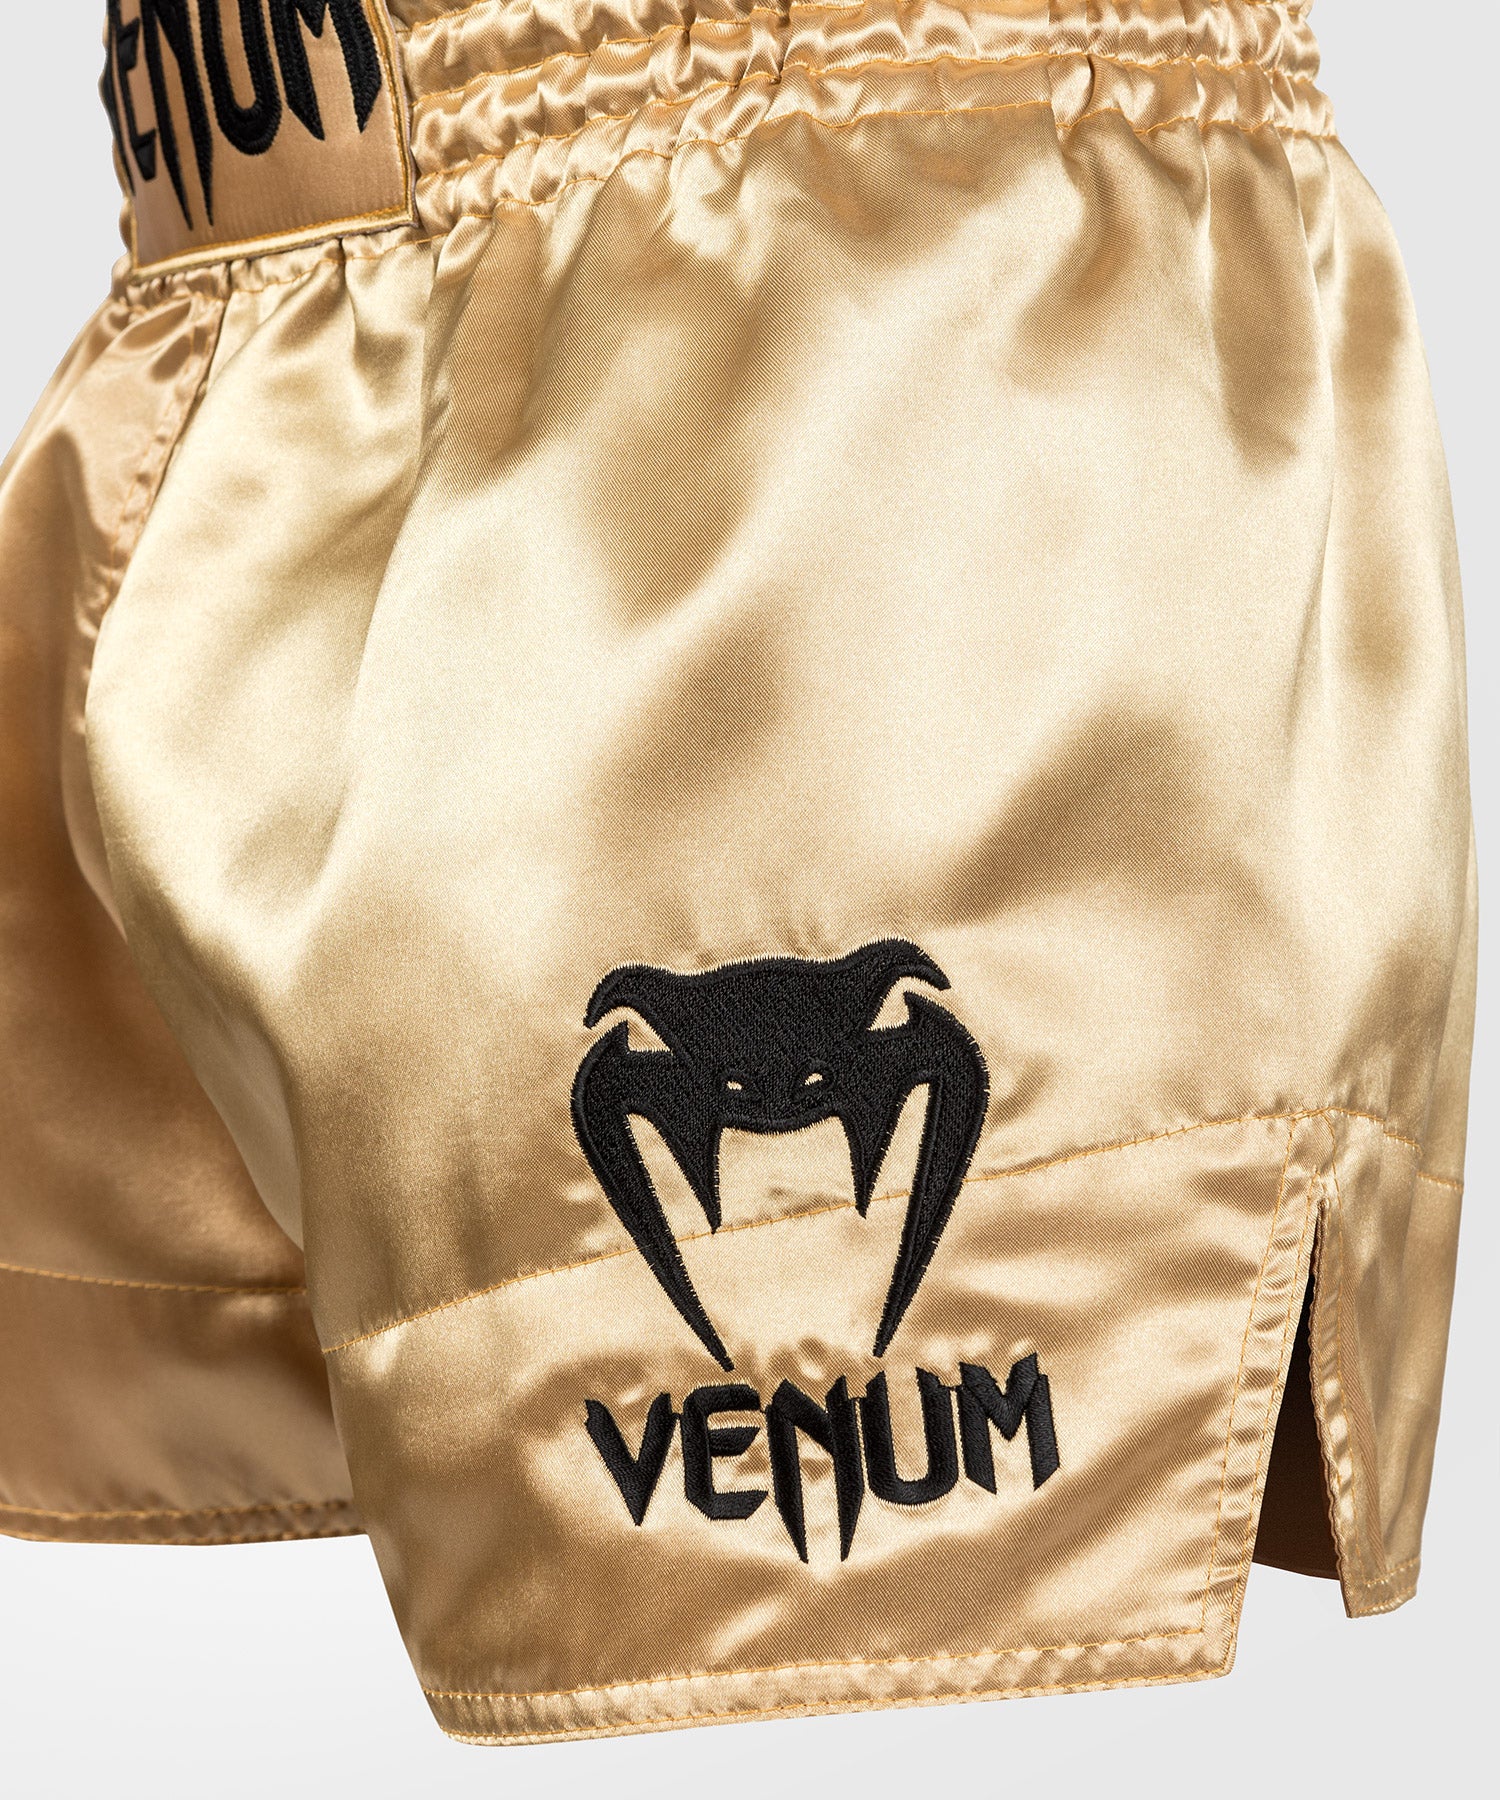 Venum Classic Short Muay Thai - Vert/Or/Noir – Venum France